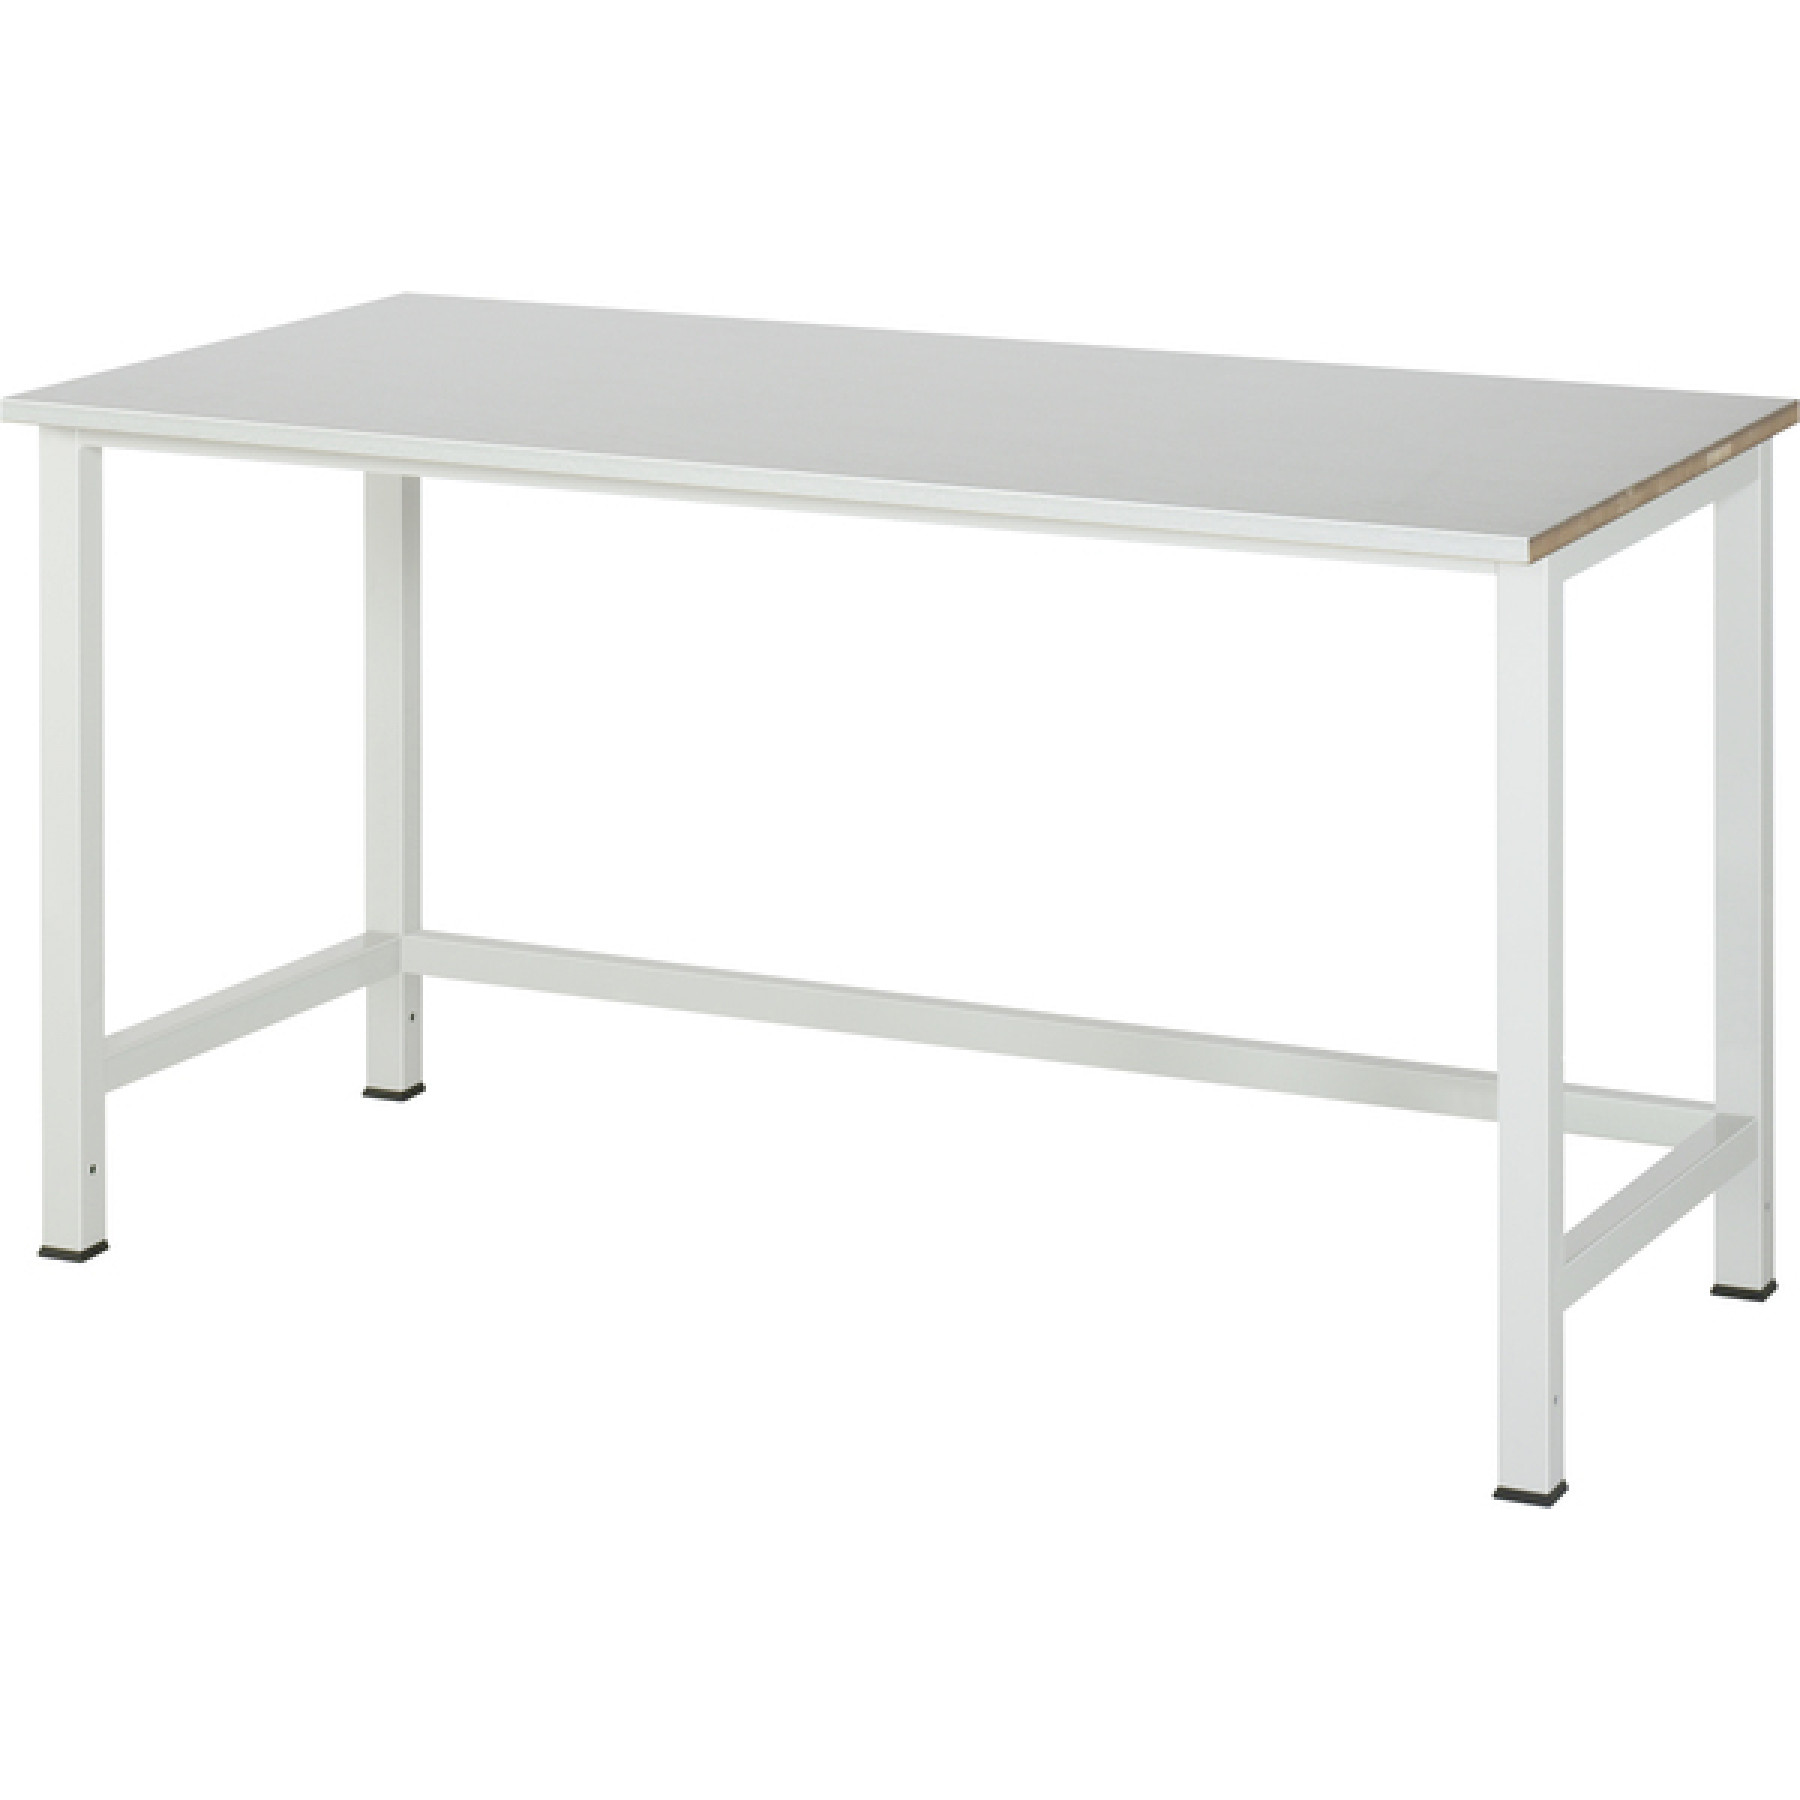 Werktafel met werkblad met staalplaat toplaag, serie 900